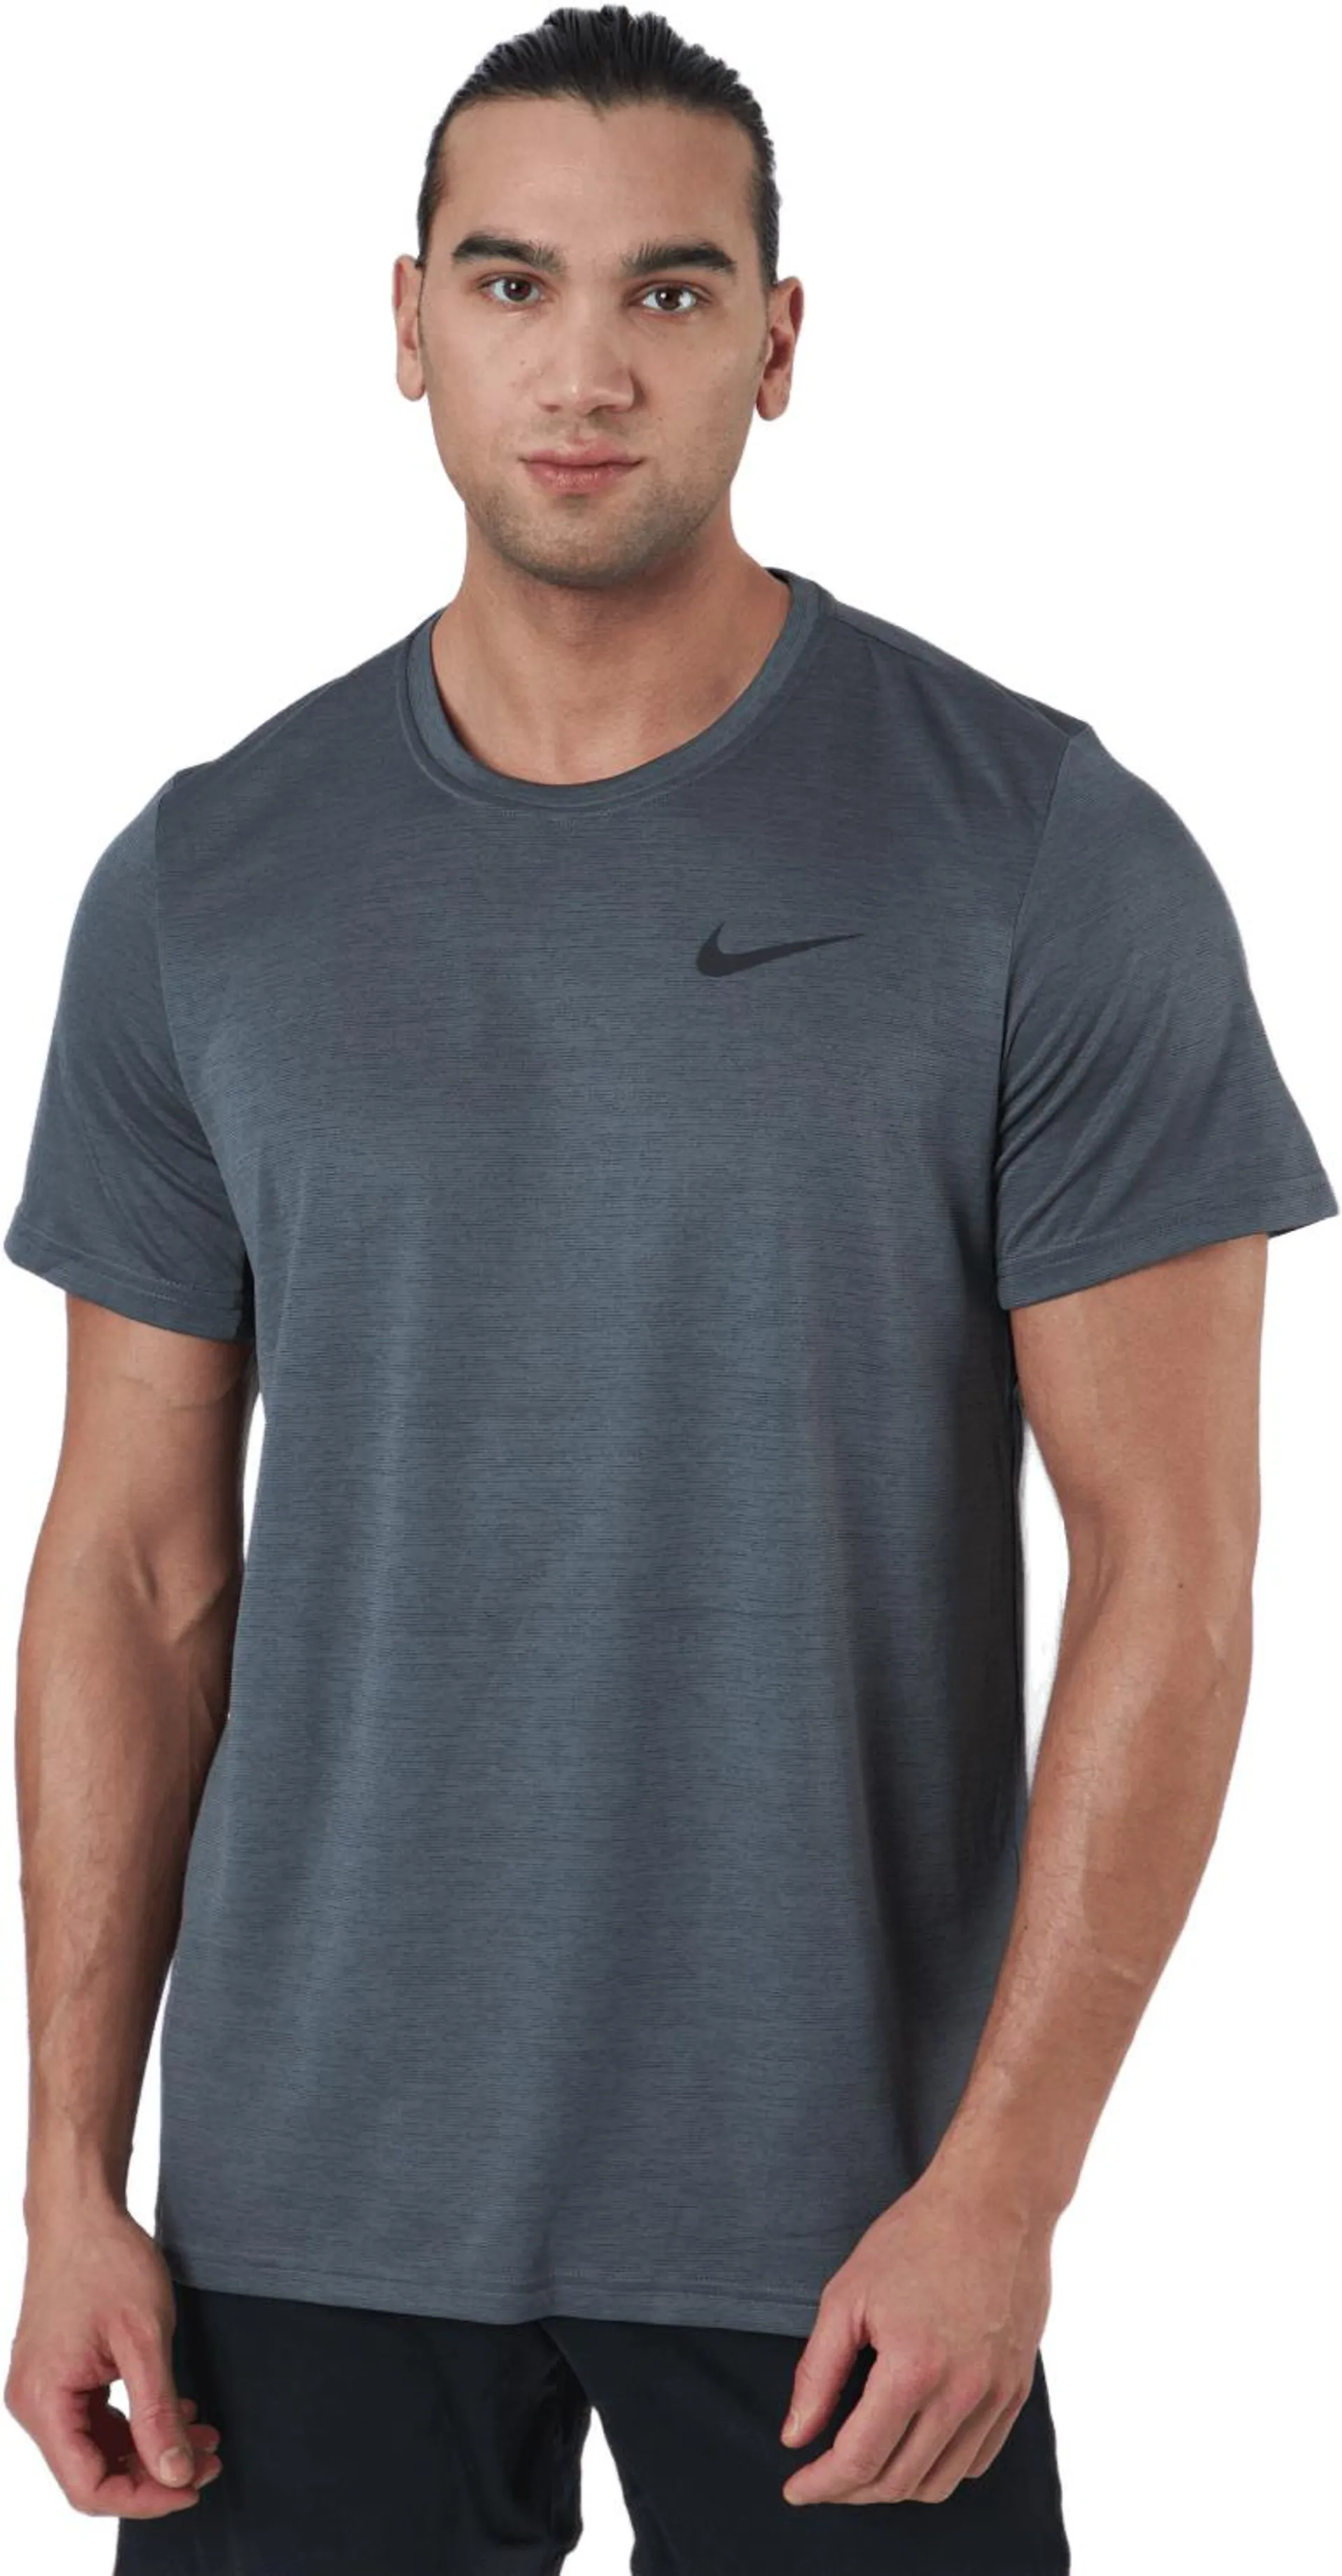 Nike Dri-fit Superset Men's Sh Iron Grey/black